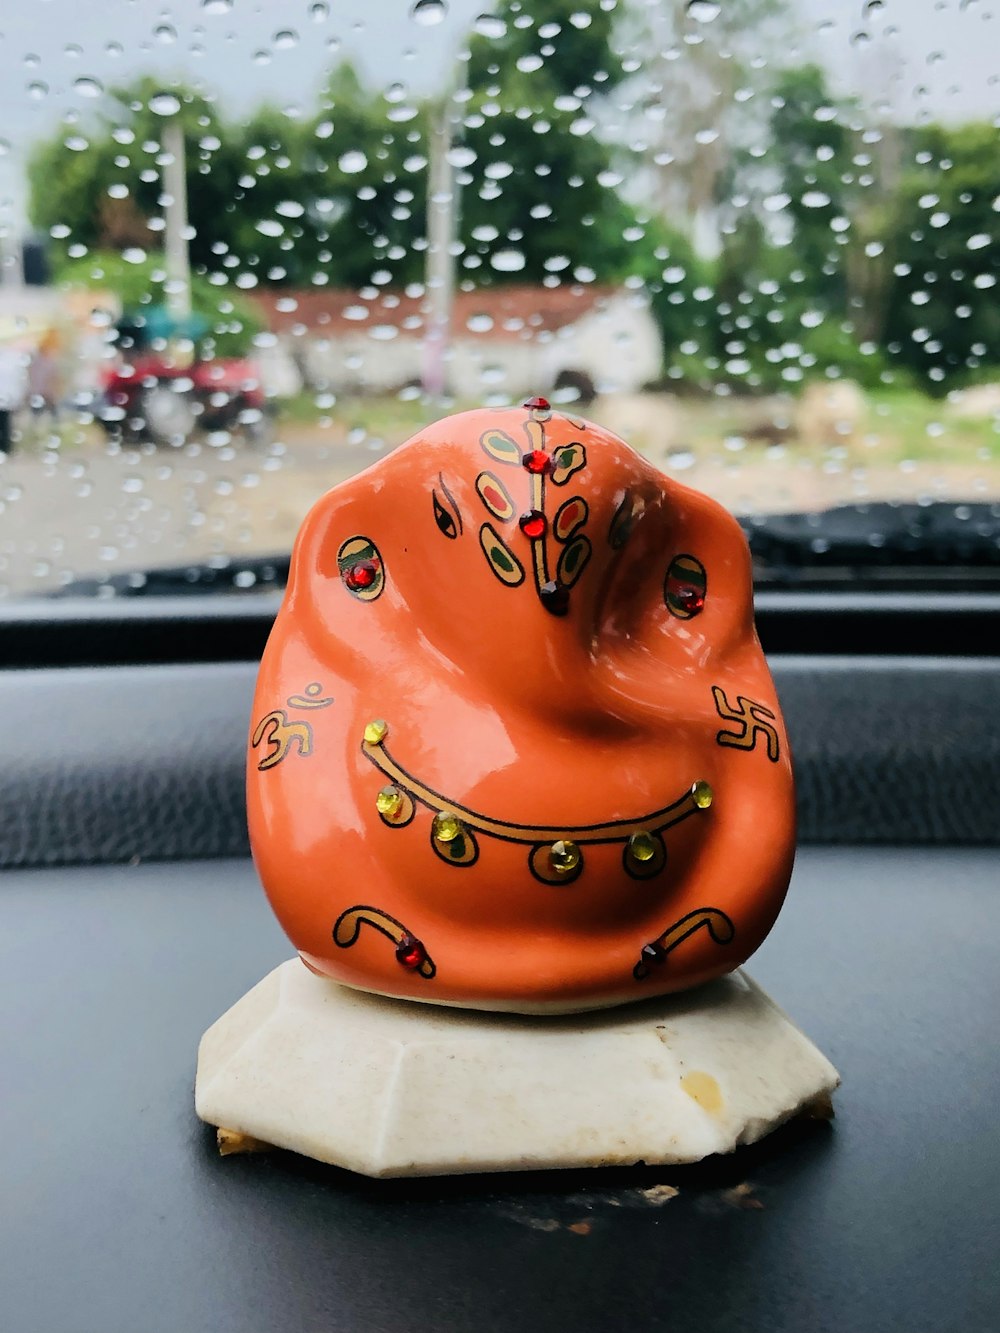 a ceramic animal sitting on top of a car dashboard